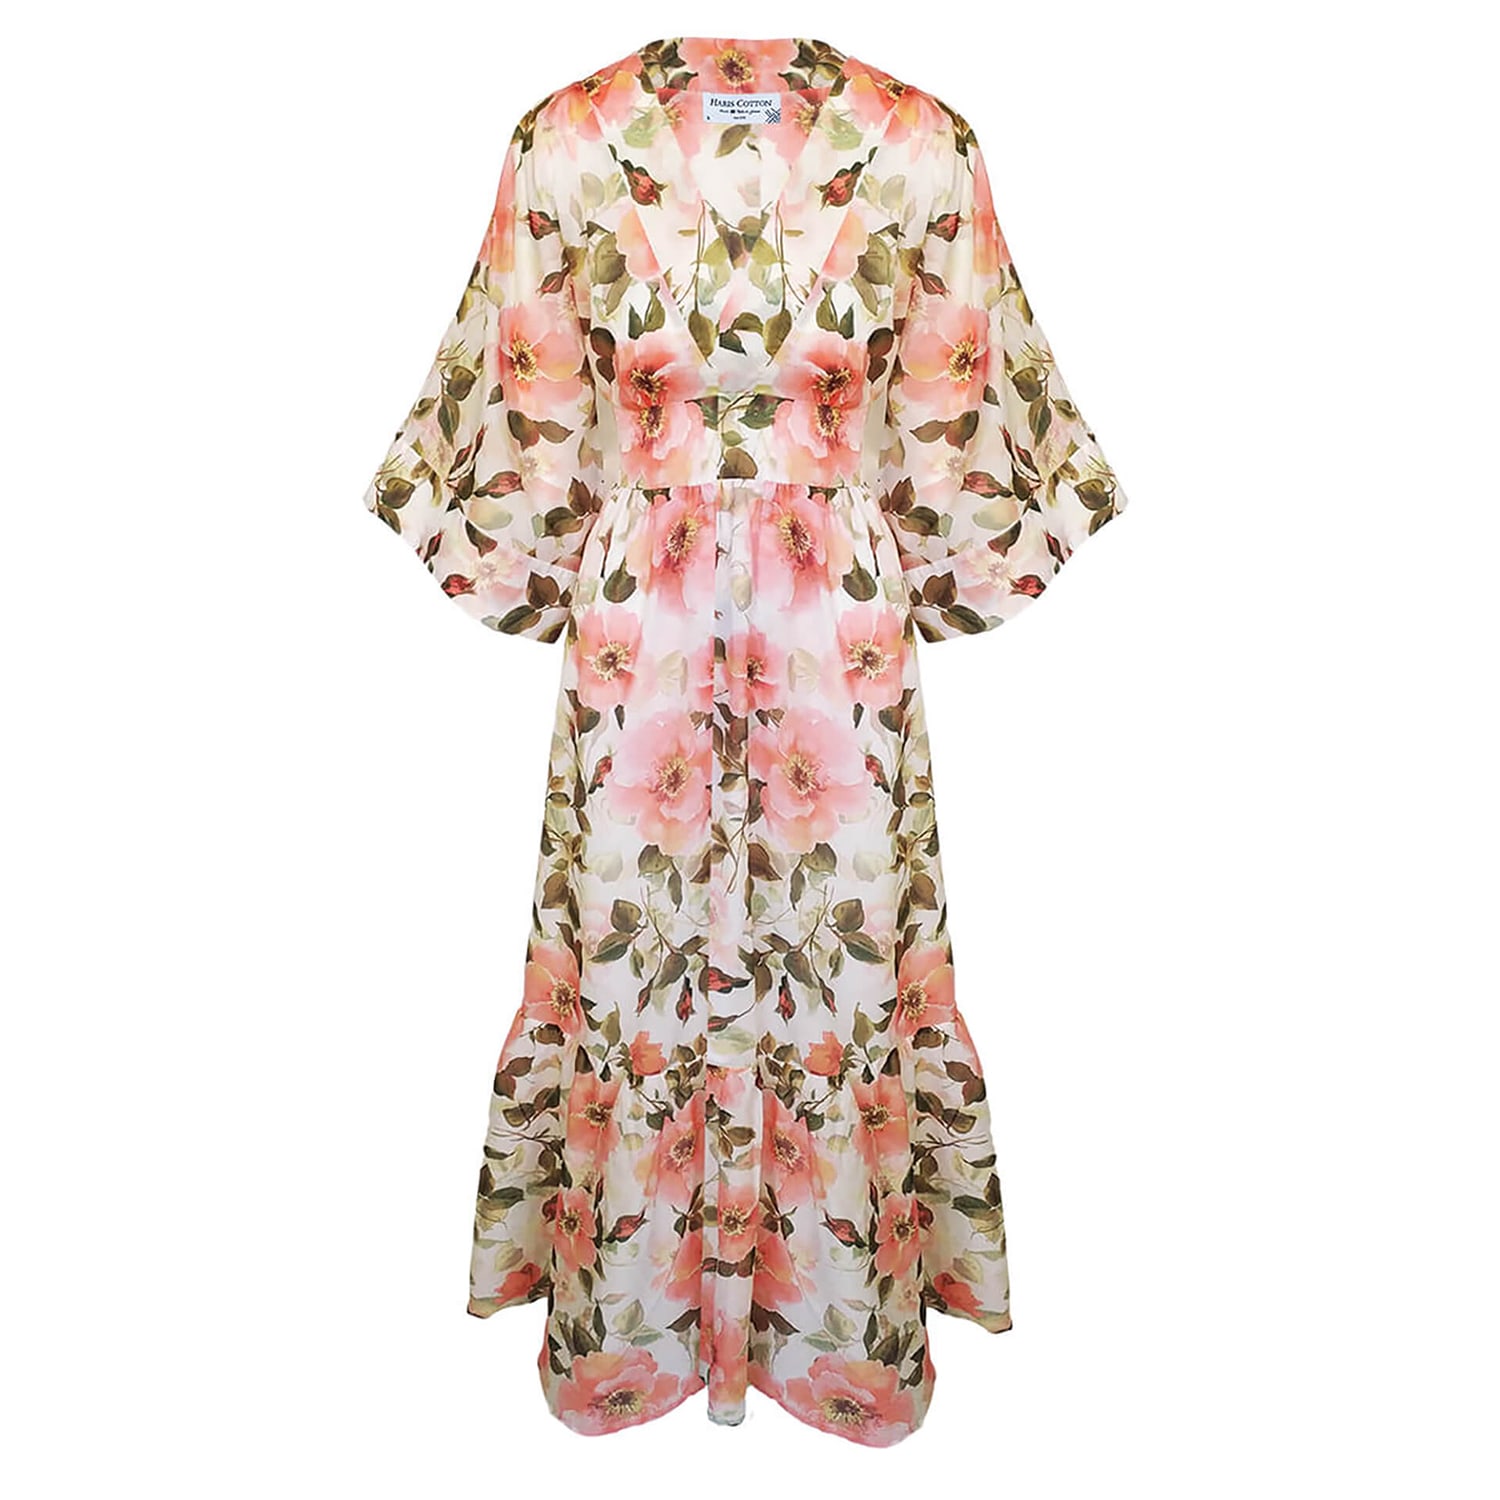 Haris Cotton Women's Printed Voile Cotton Maxi Wrap Dress With Kimono Sleeves - Pink Roses